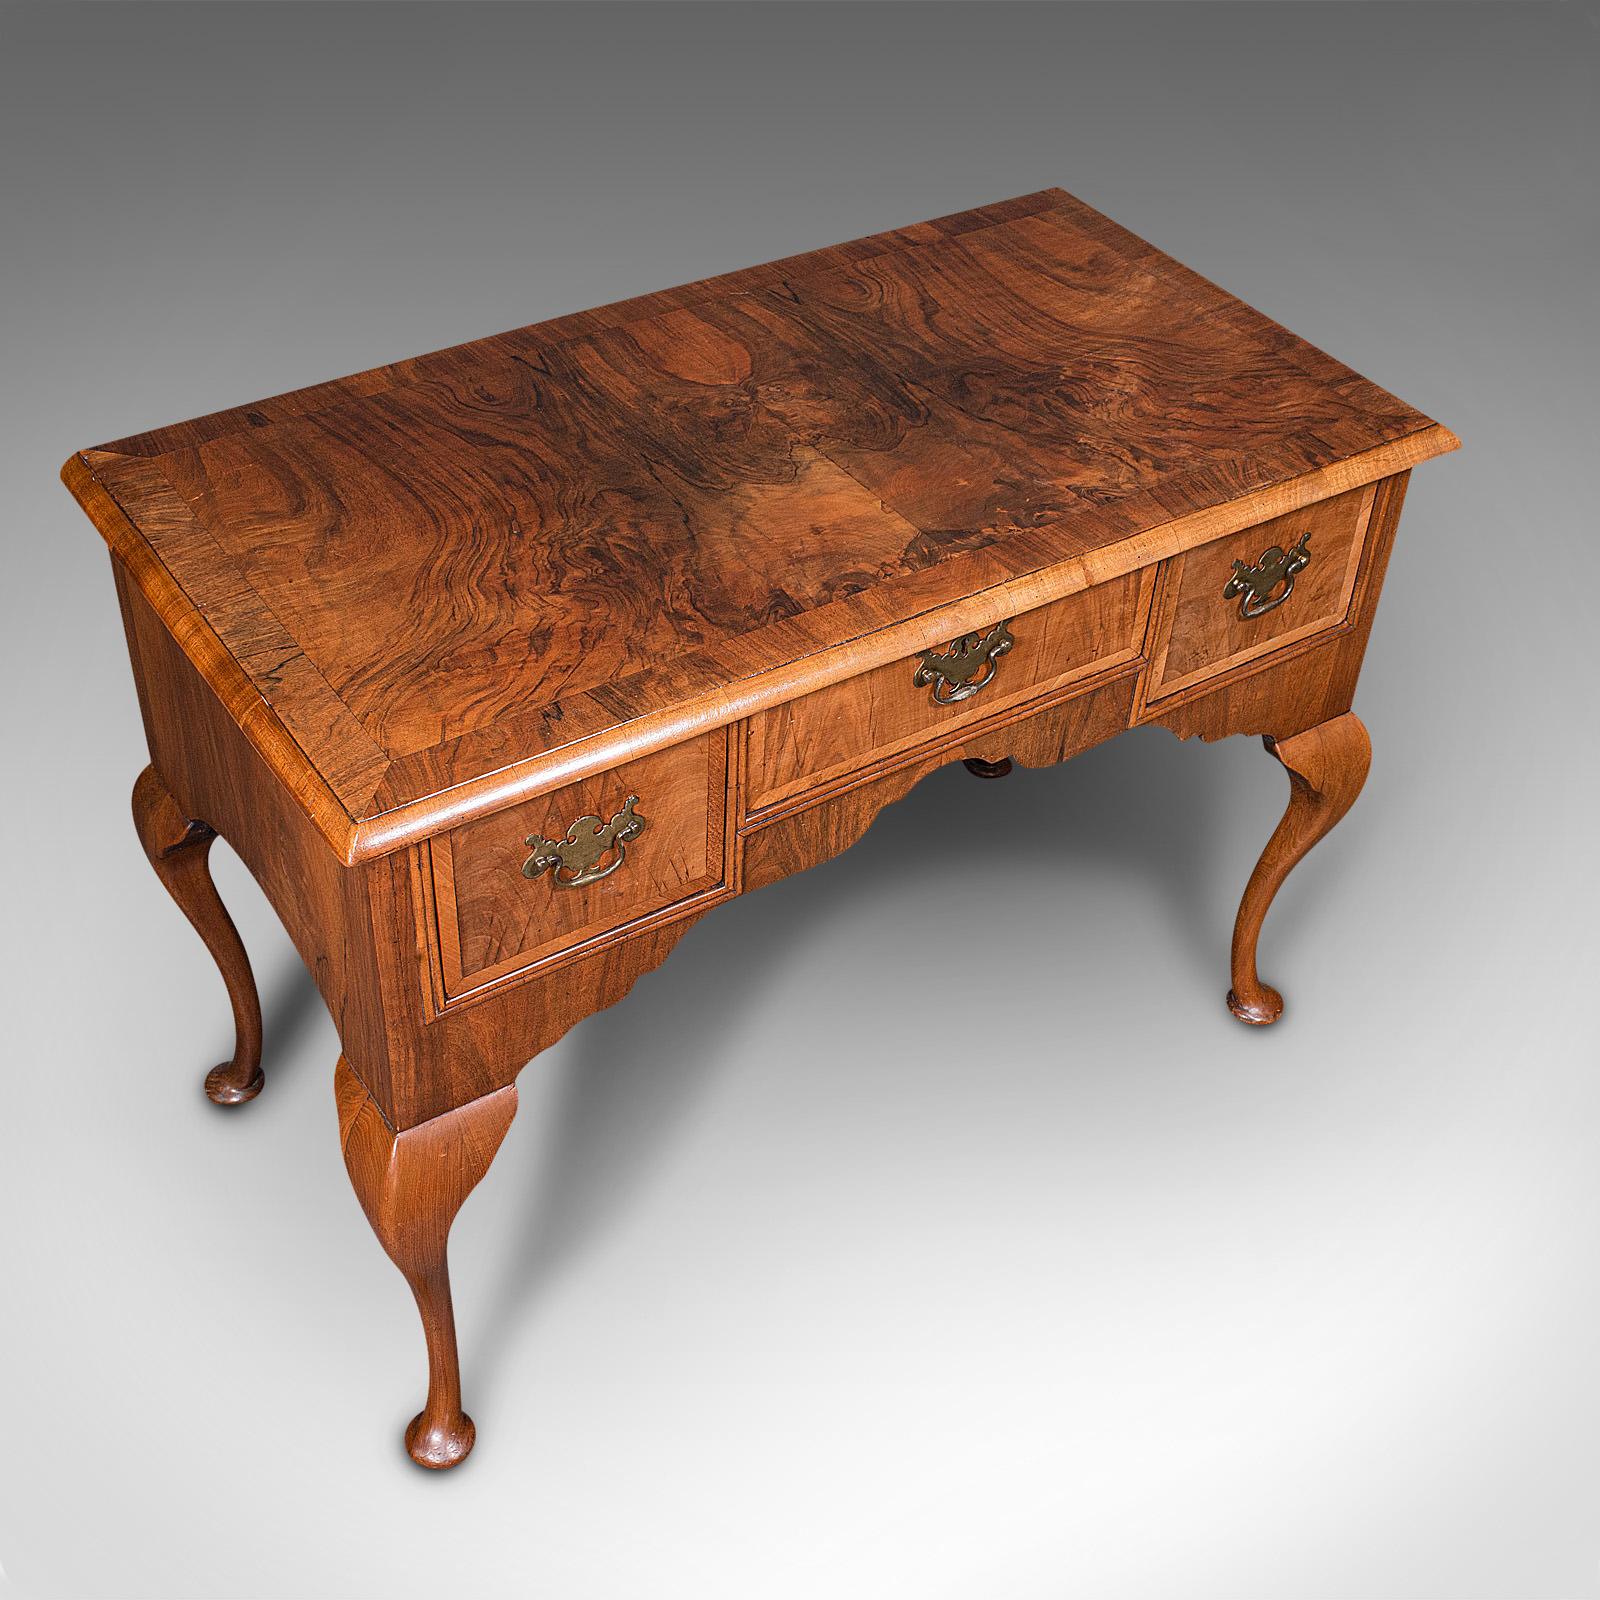 18th Century Antique Writing Desk, English, Burr Walnut, Oak, Lowboy, Table, Georgian, C.1800